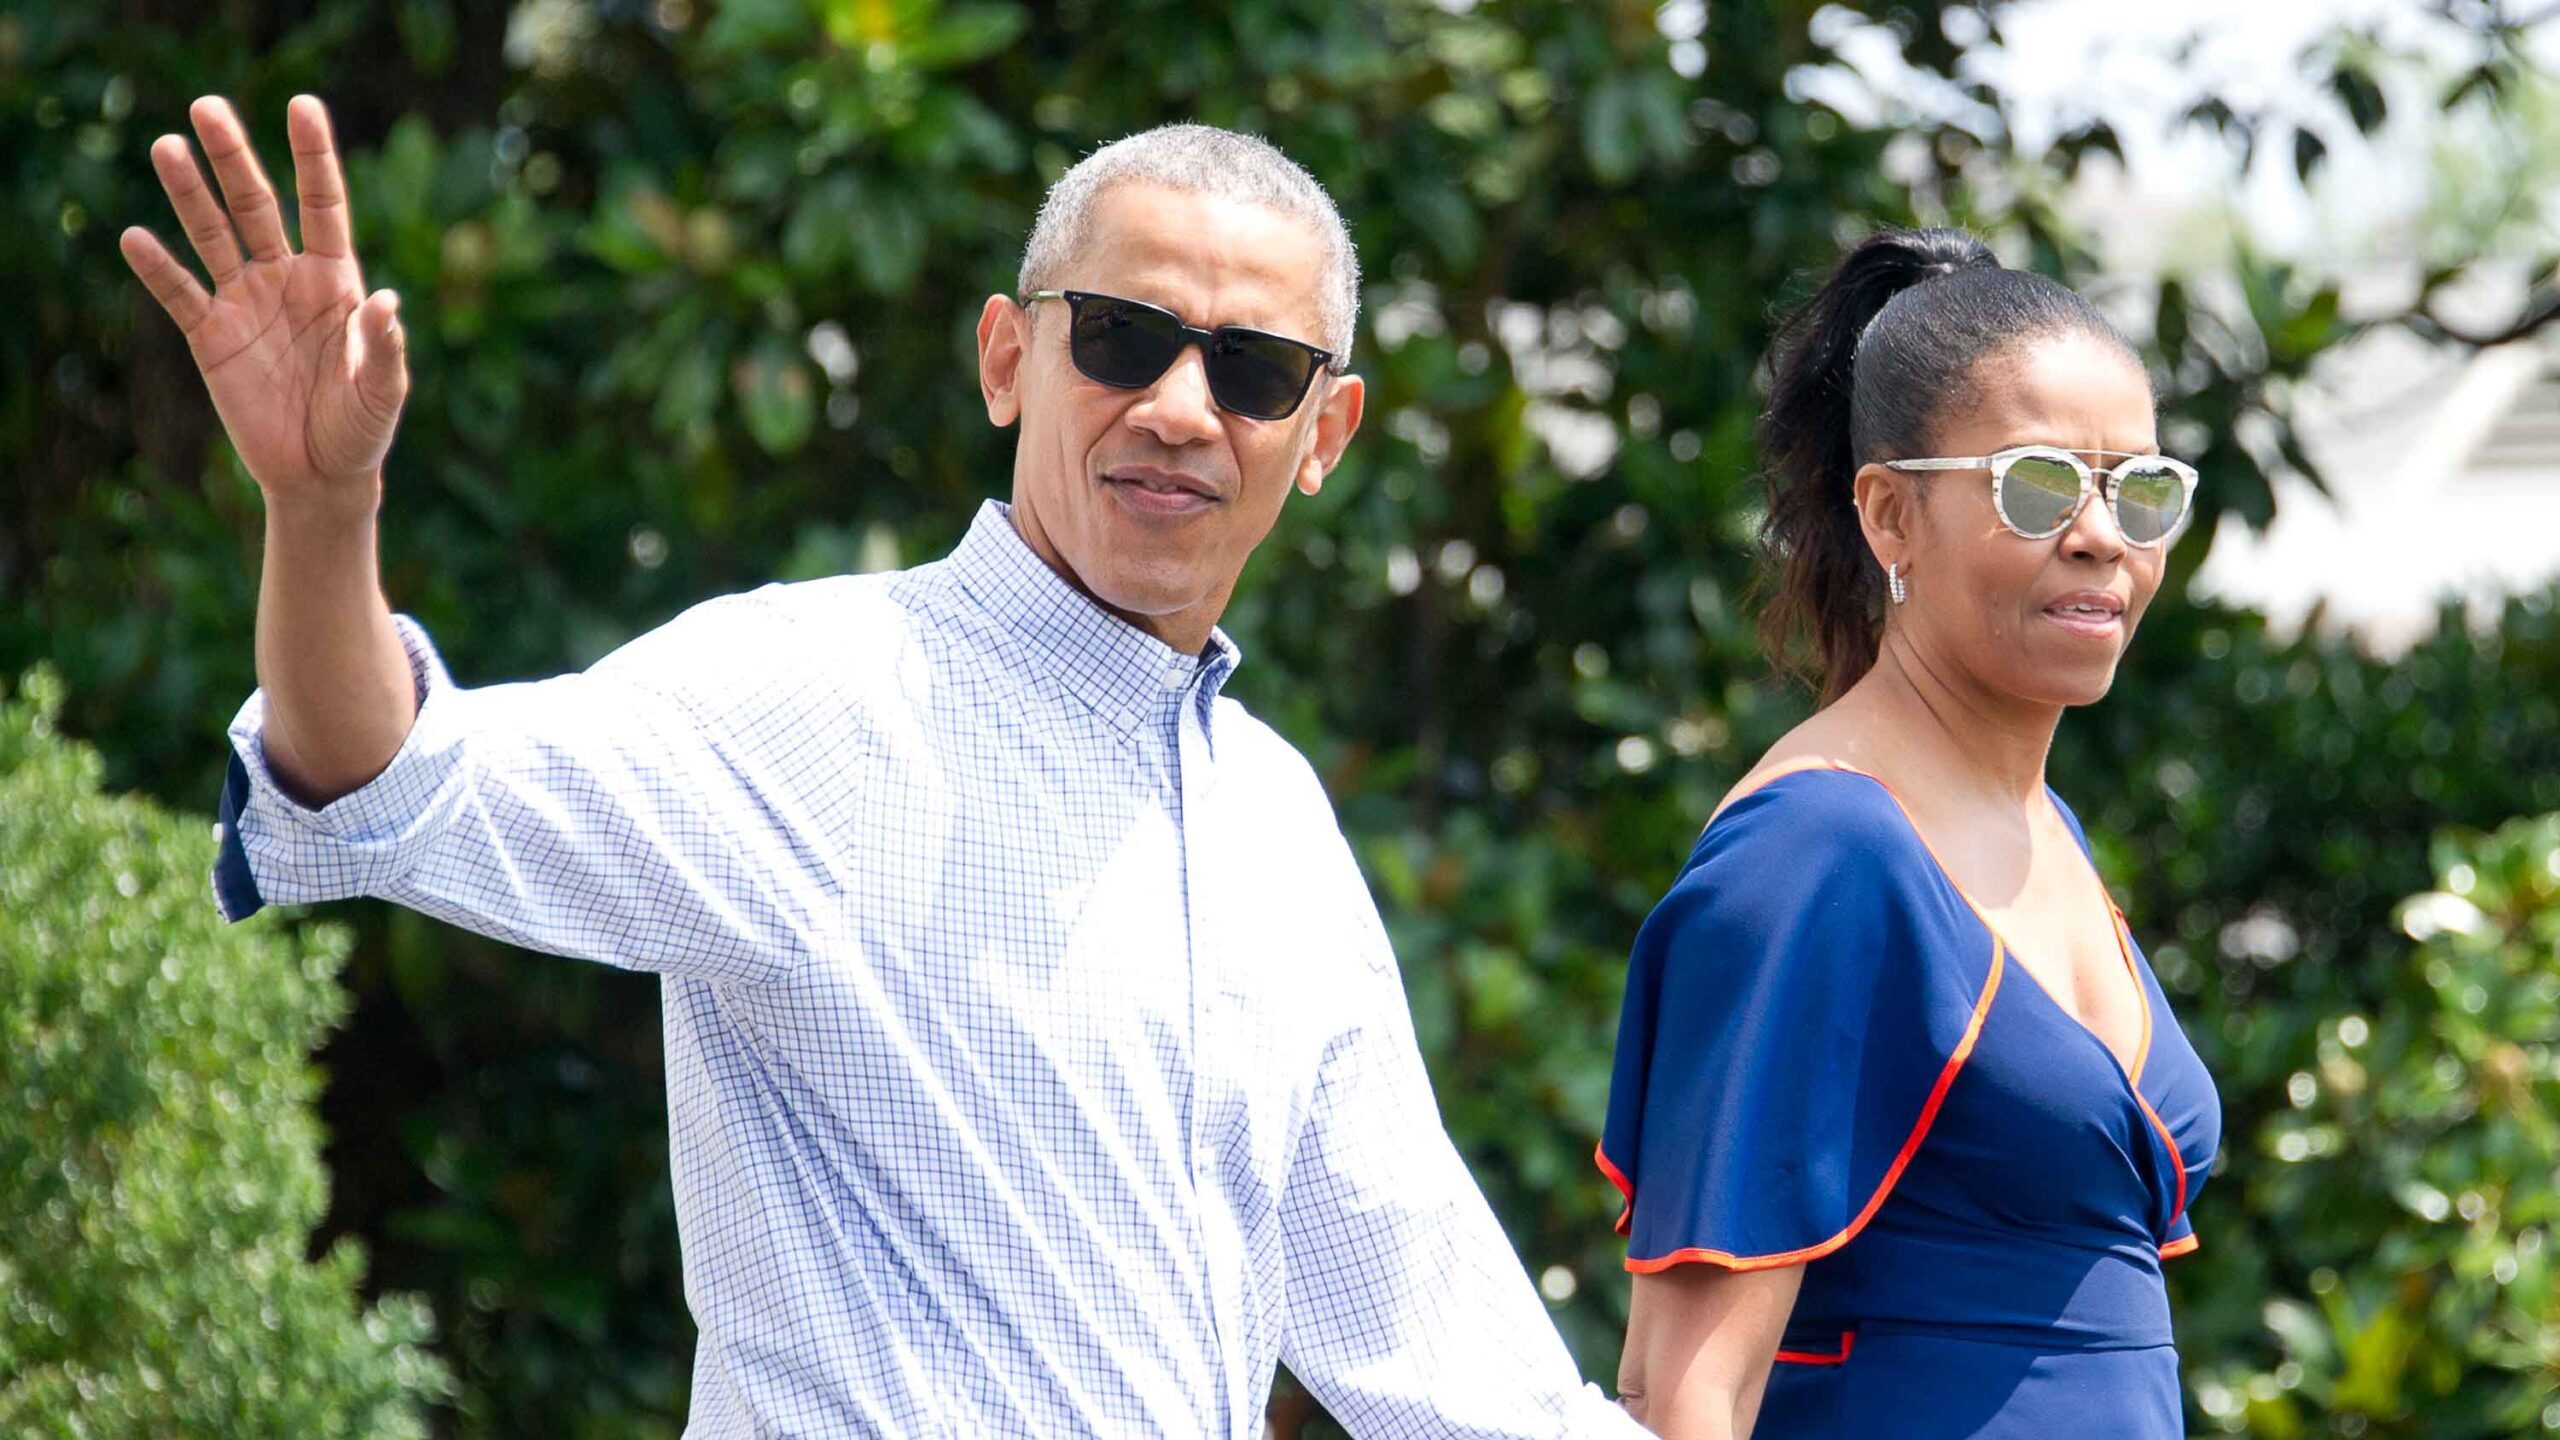 LISTEN: Here’s what’s on Barack Obama’s summer 2016 playlist